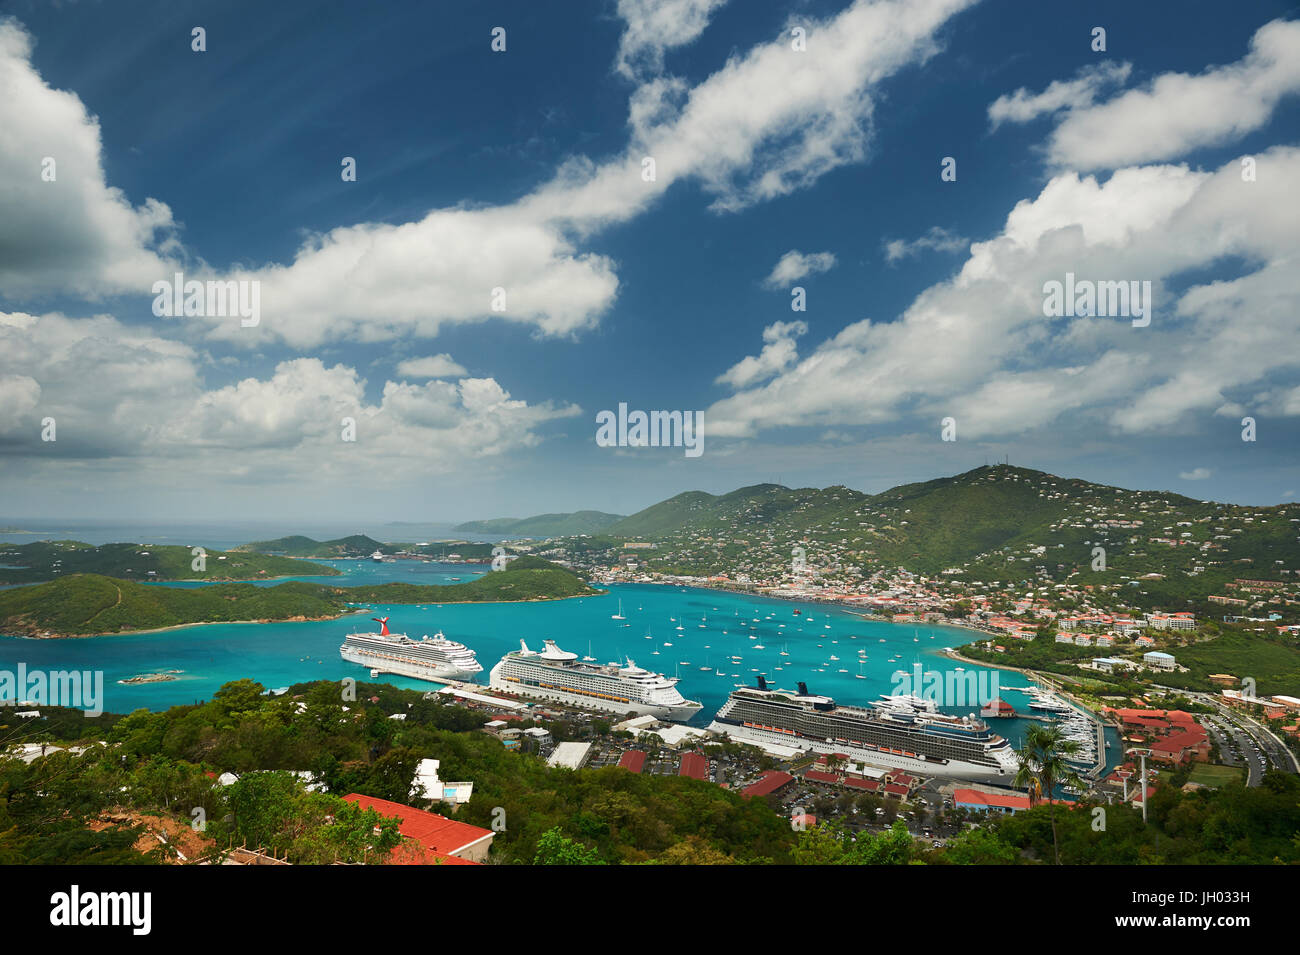 Crociera nei Caraibi del tema. Caraibi blue bay vista aerea con navi da crociera Foto Stock